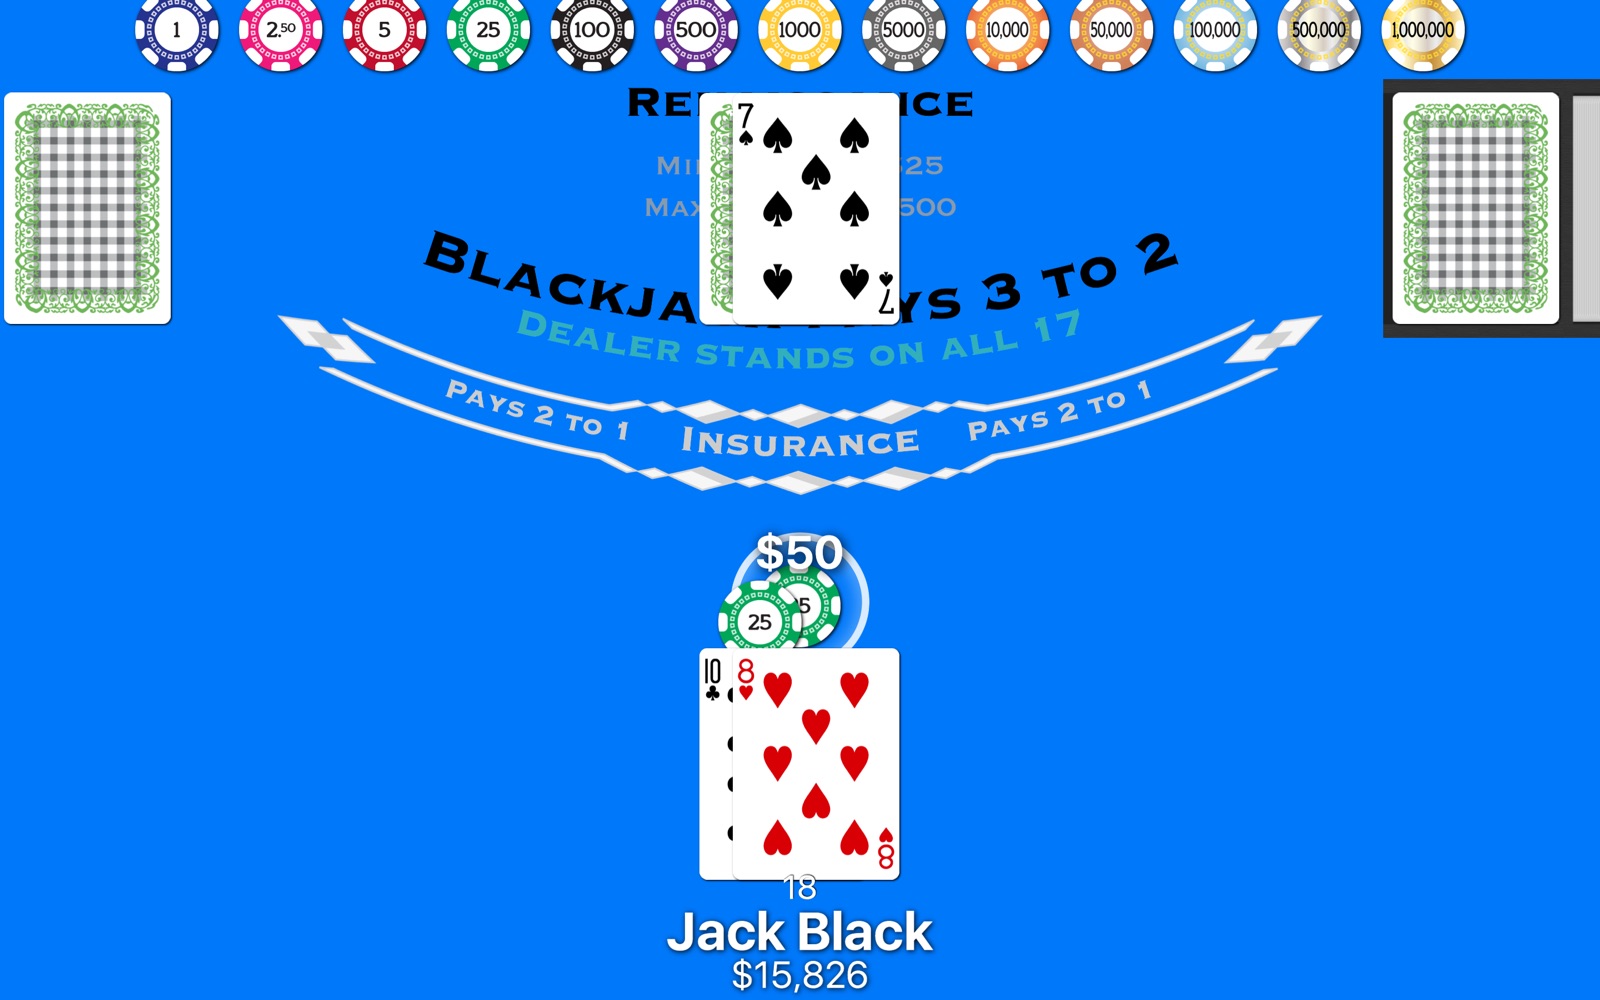 Blackjack Player 1.2 : Main Window